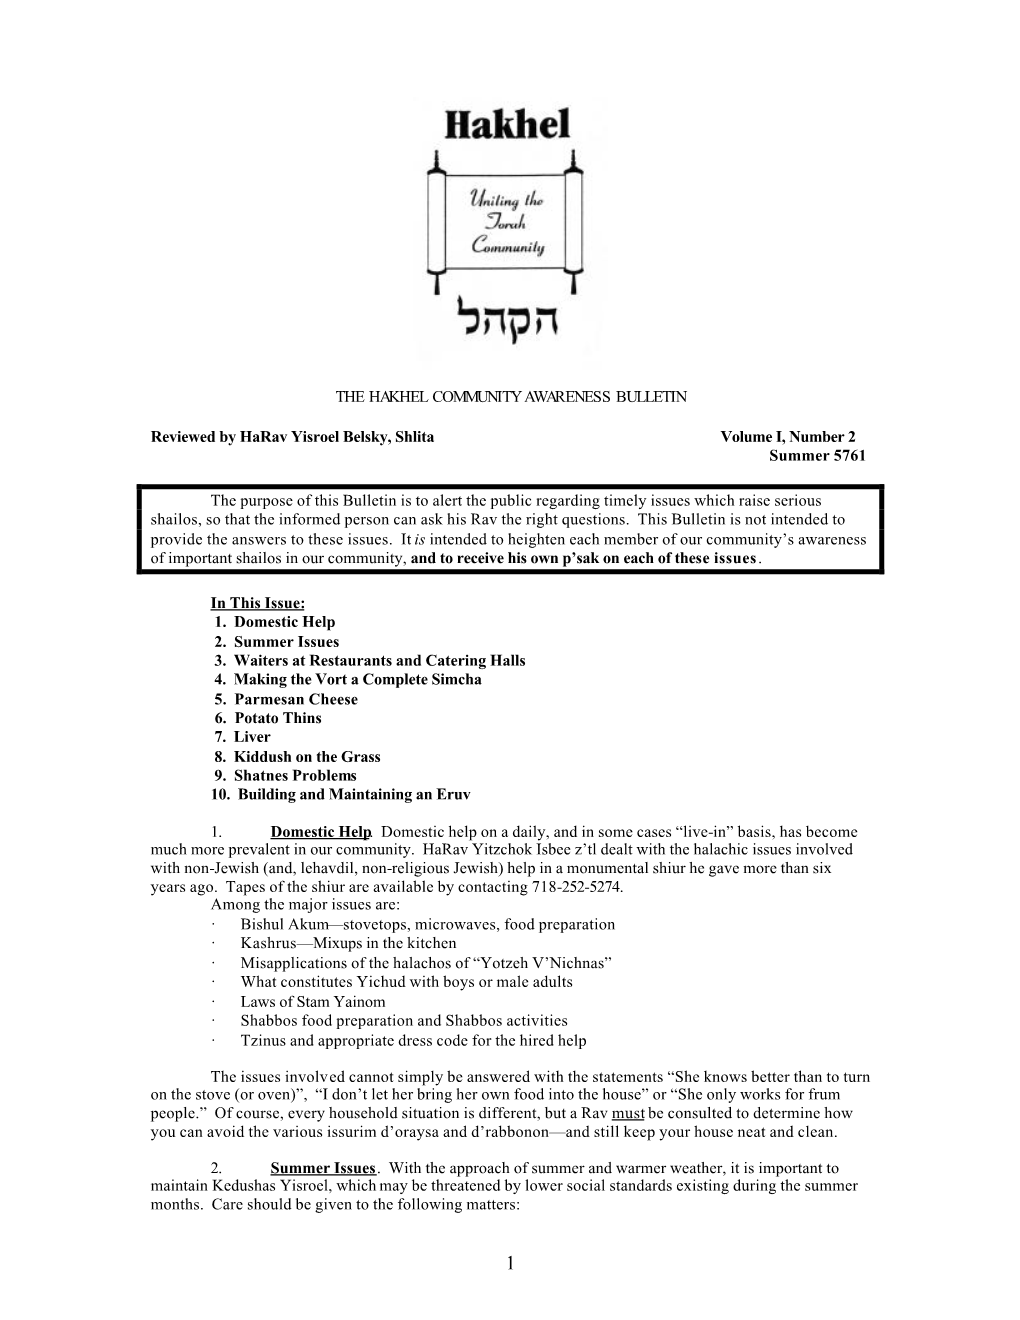 THE HAKHEL COMMUNITY AWARENESS BULLETIN Reviewed by Harav Yisroel Belsky, Shlita Volume I, Number 2 Summer 5761 the Purpose of T